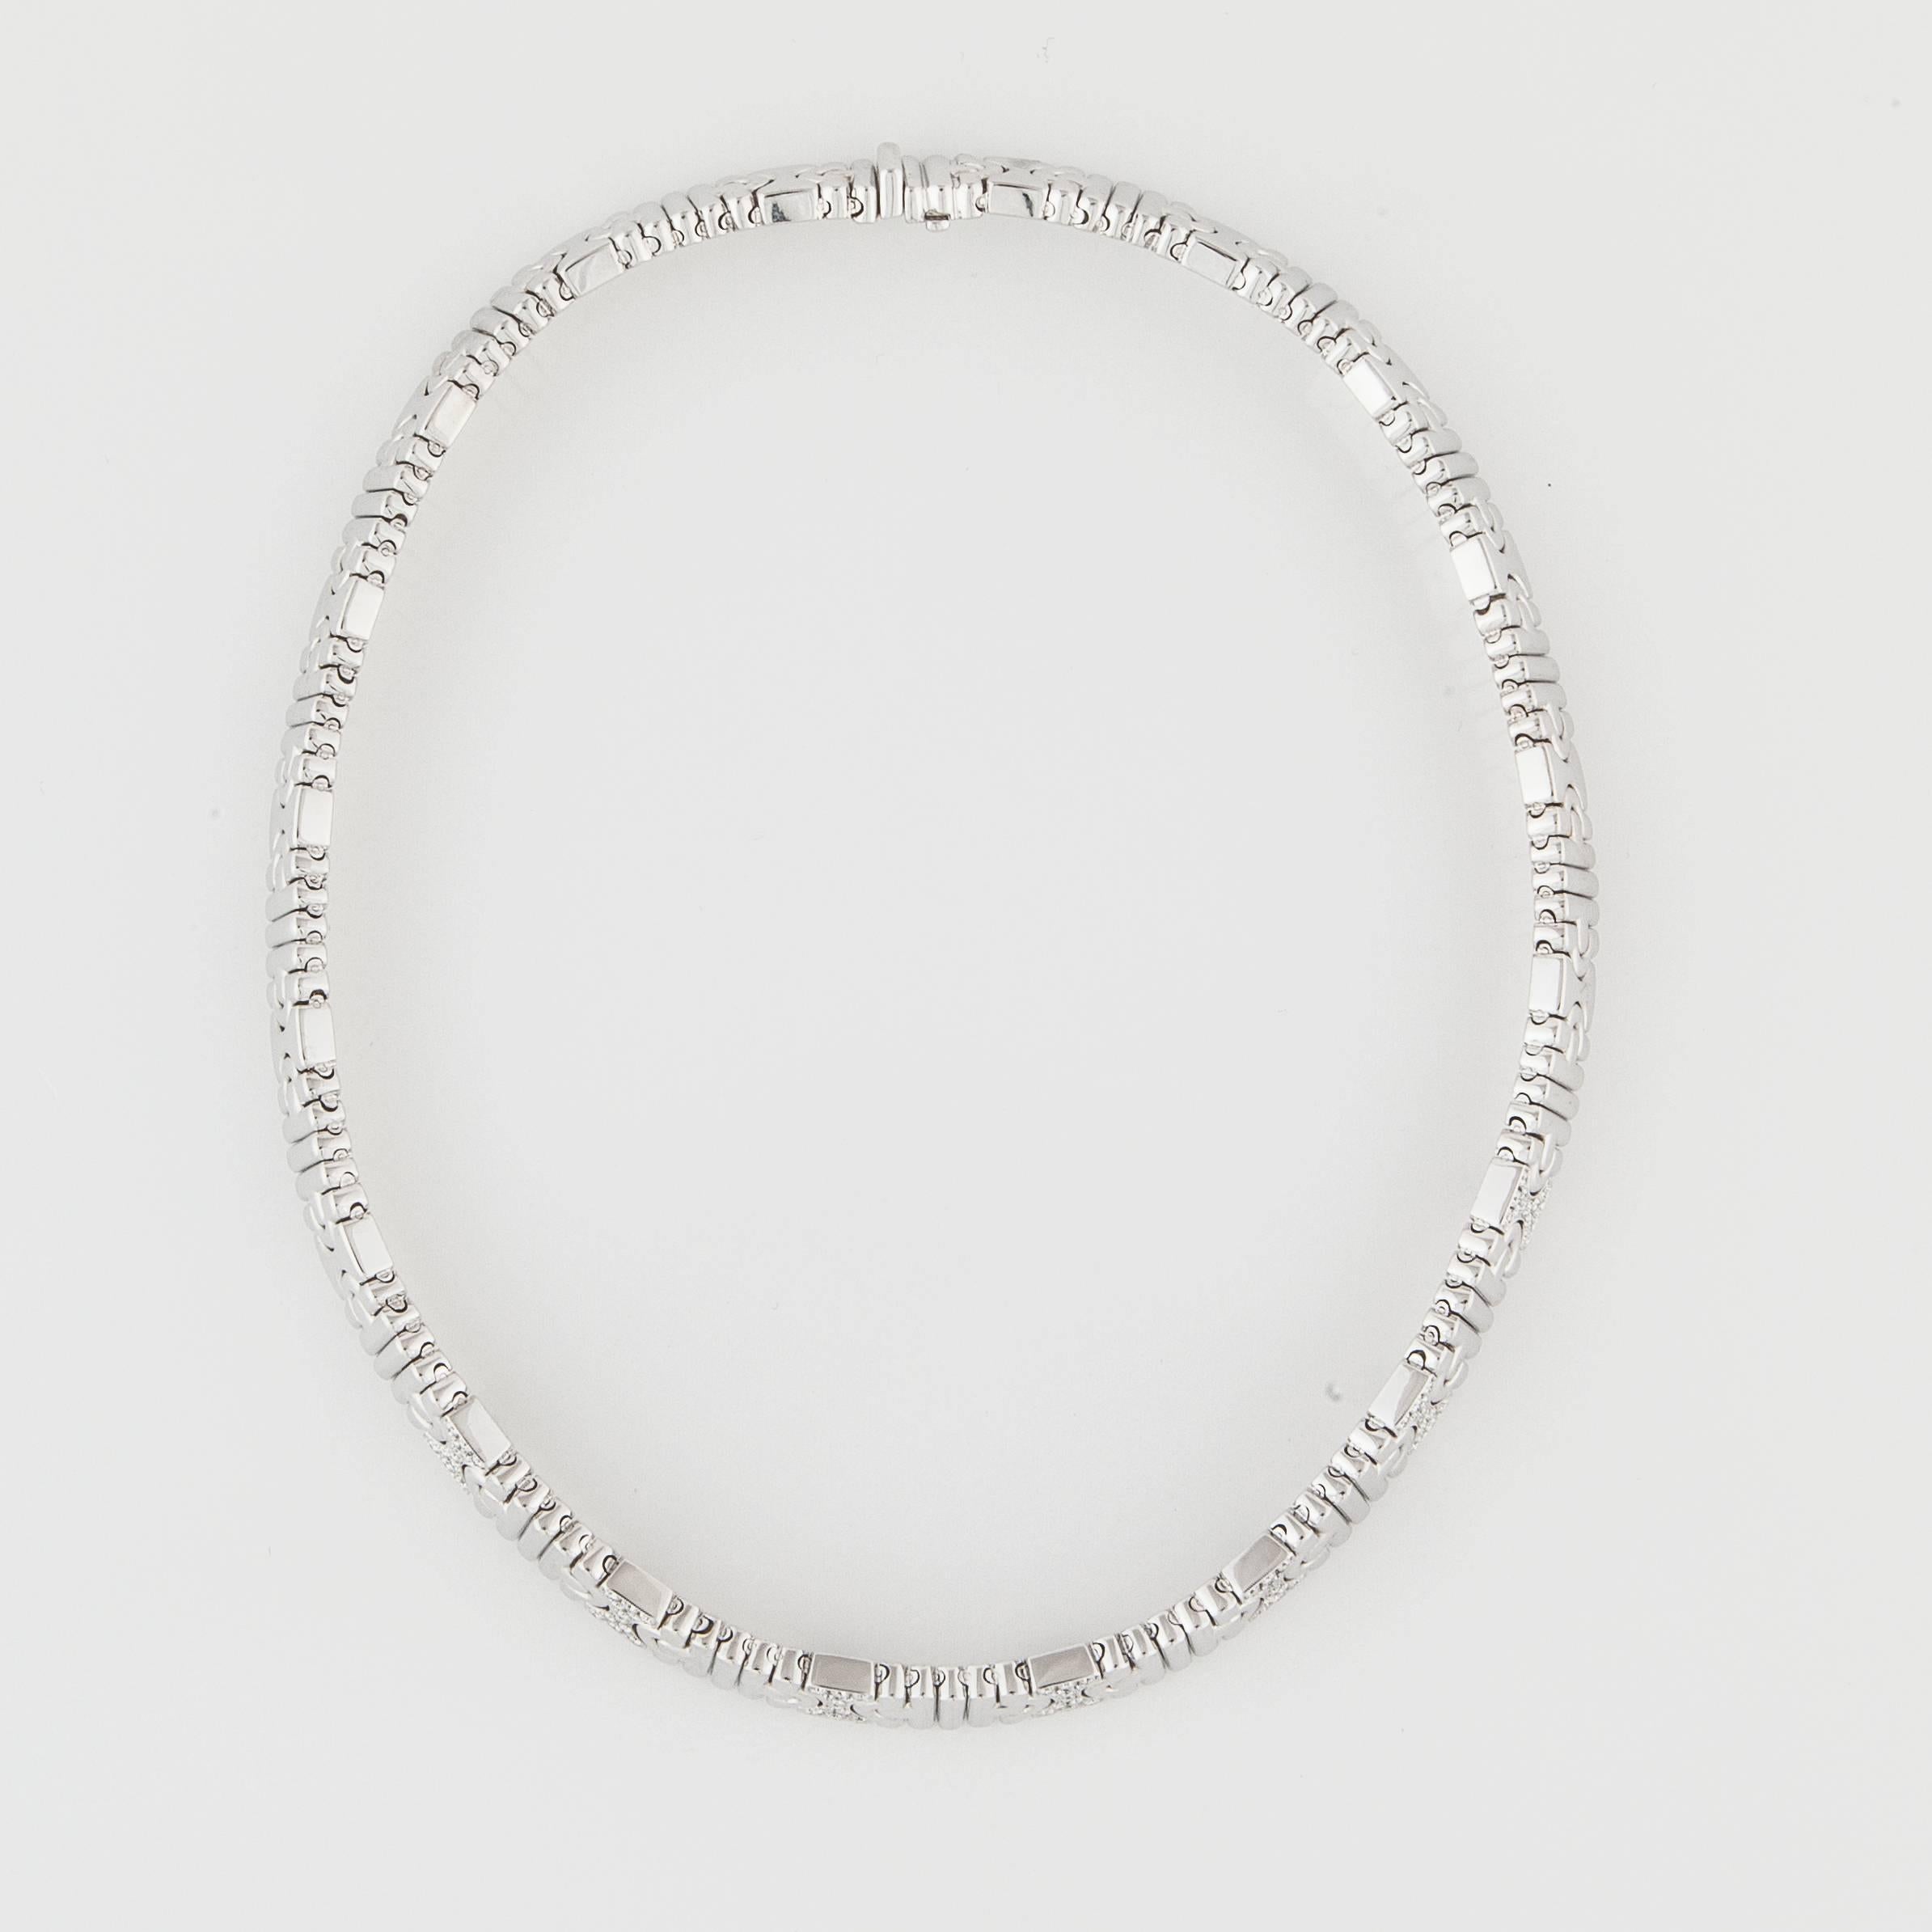 Bulgari 18K white gold collar style necklace marked 